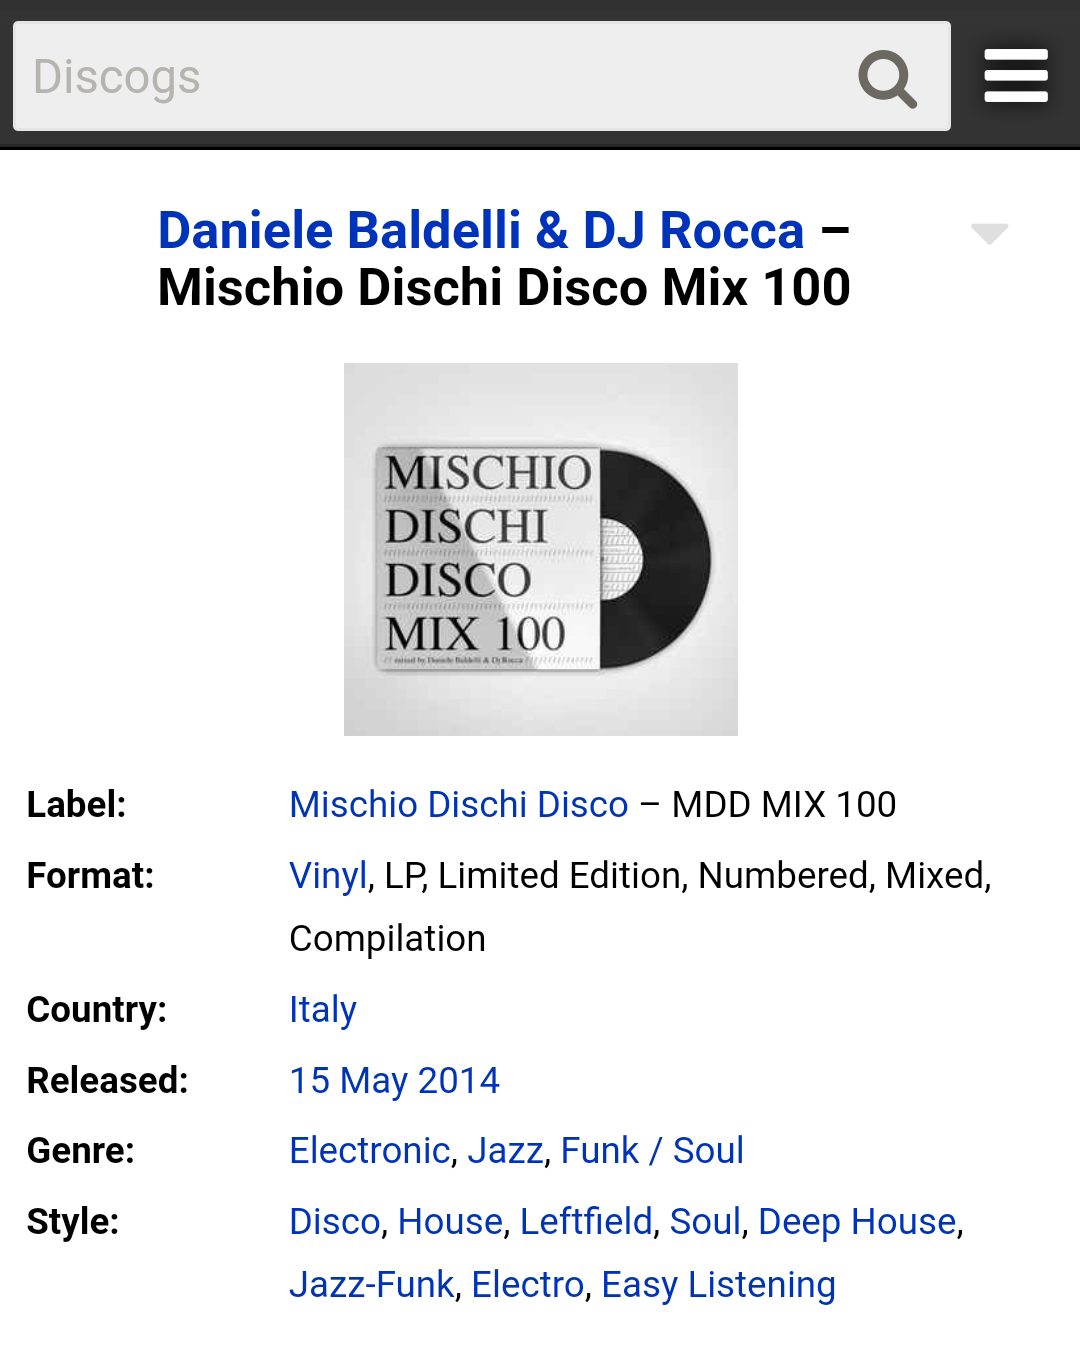 blive irriteret Vil opfindelse Mischio Dischi Disco / / a classic feel in club music